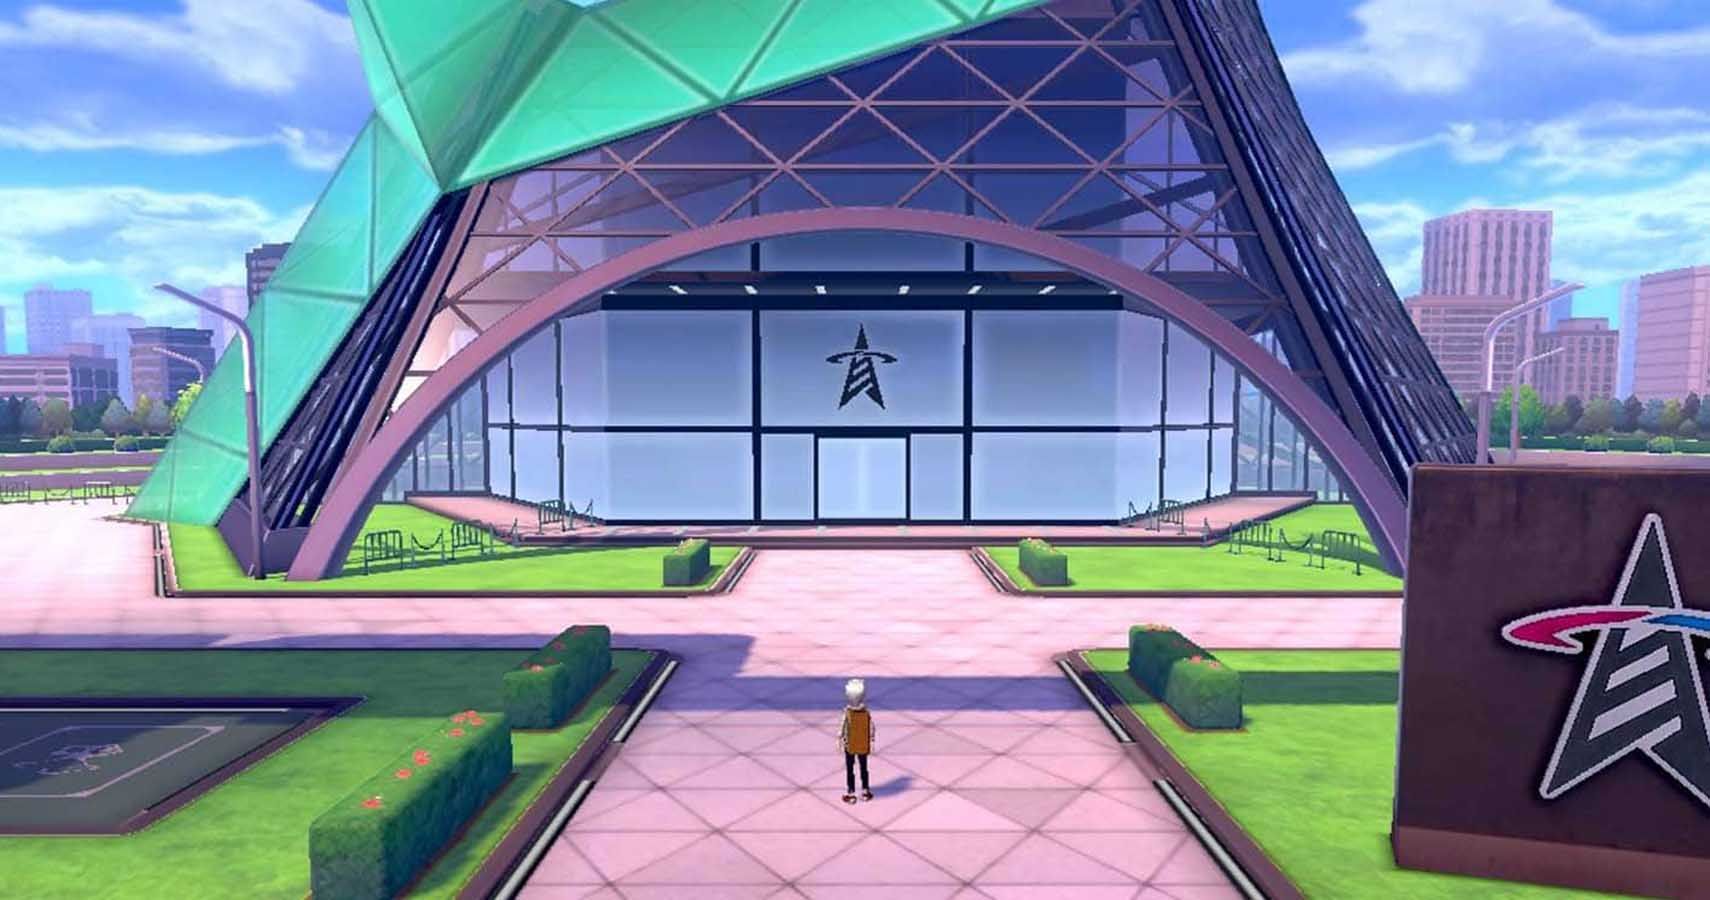 Pokémon Sword & Shield traz Battle Stadium com batalha online rankeada